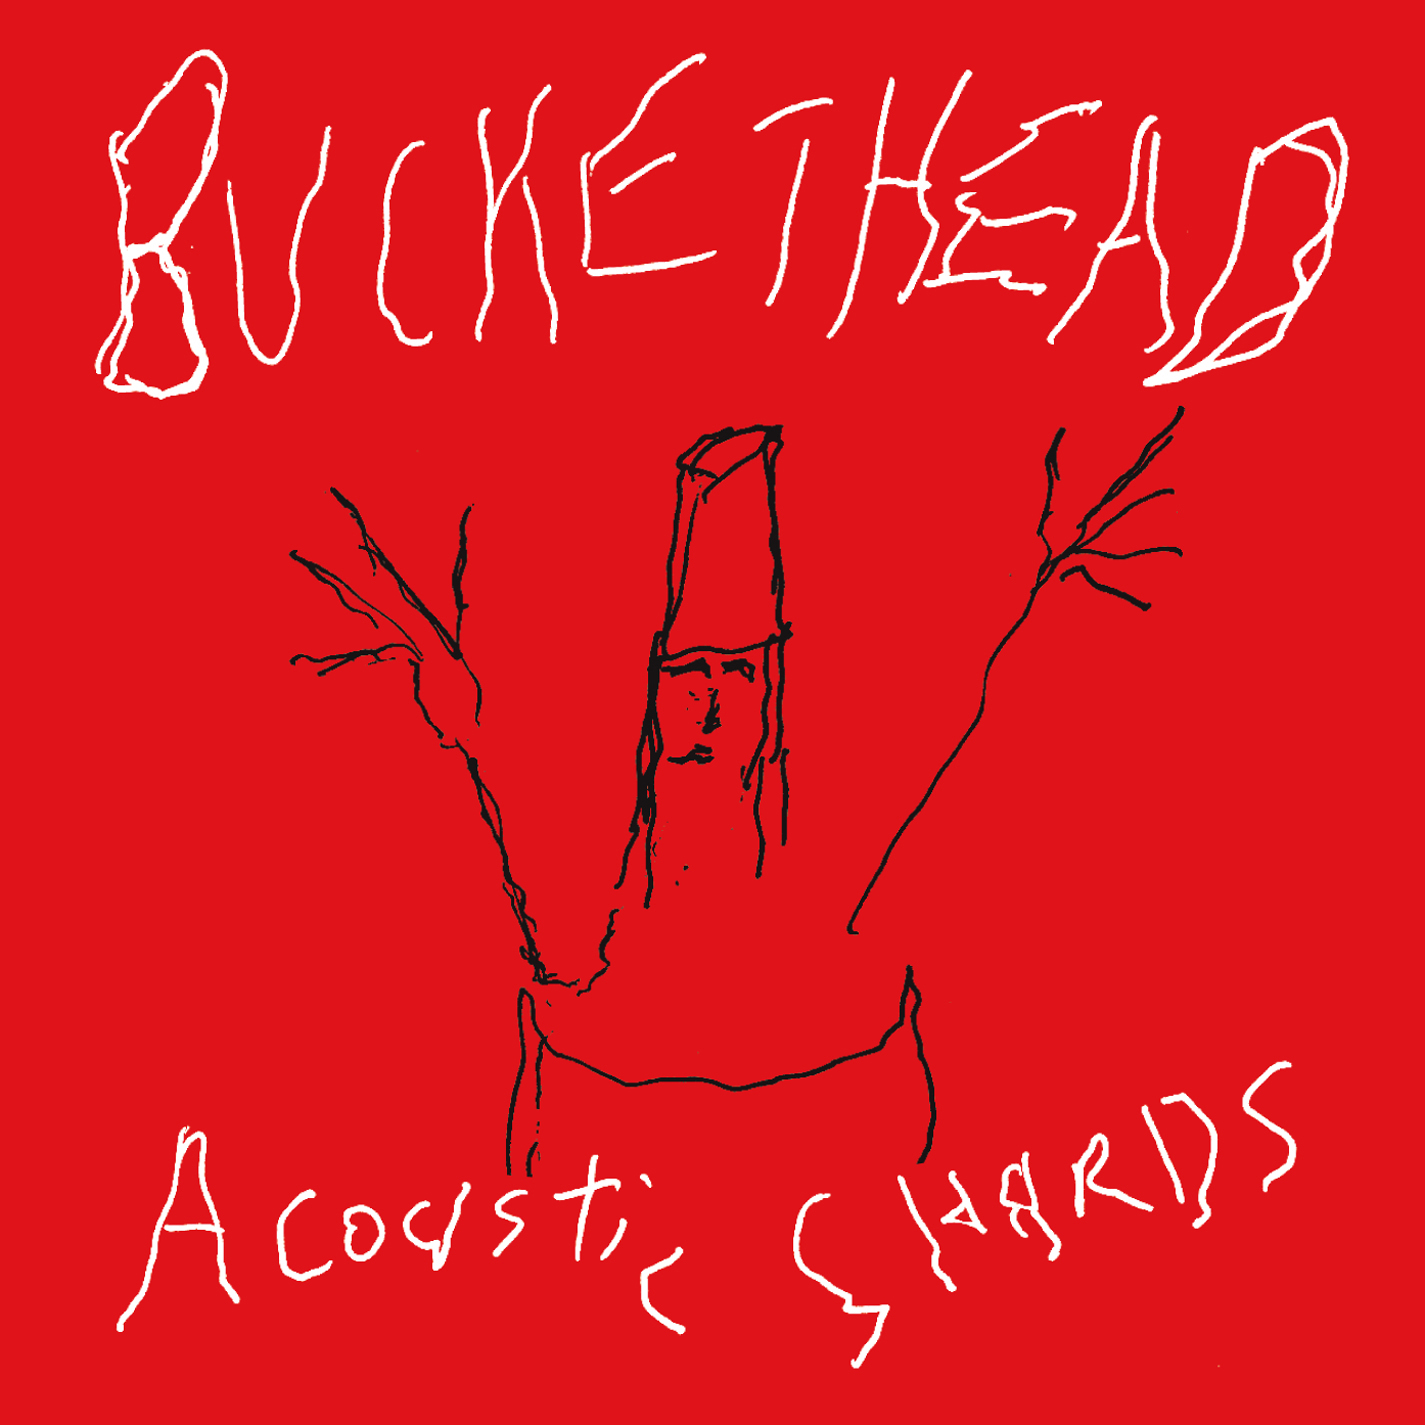 Buckethead - Acoustic Shards (2007)